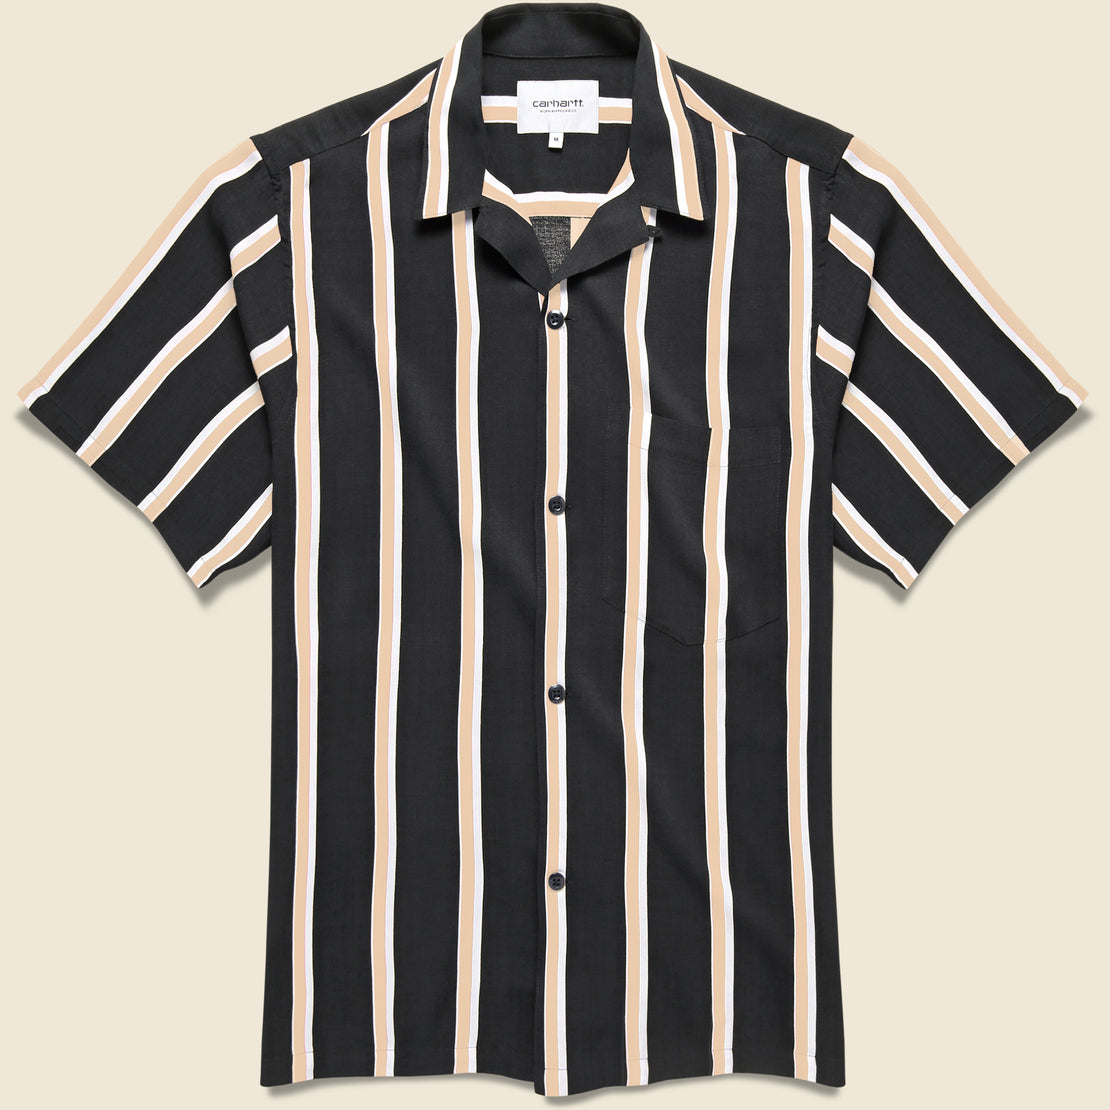 Carhartt WIP Gelder Stripe Camp Shirt - Black